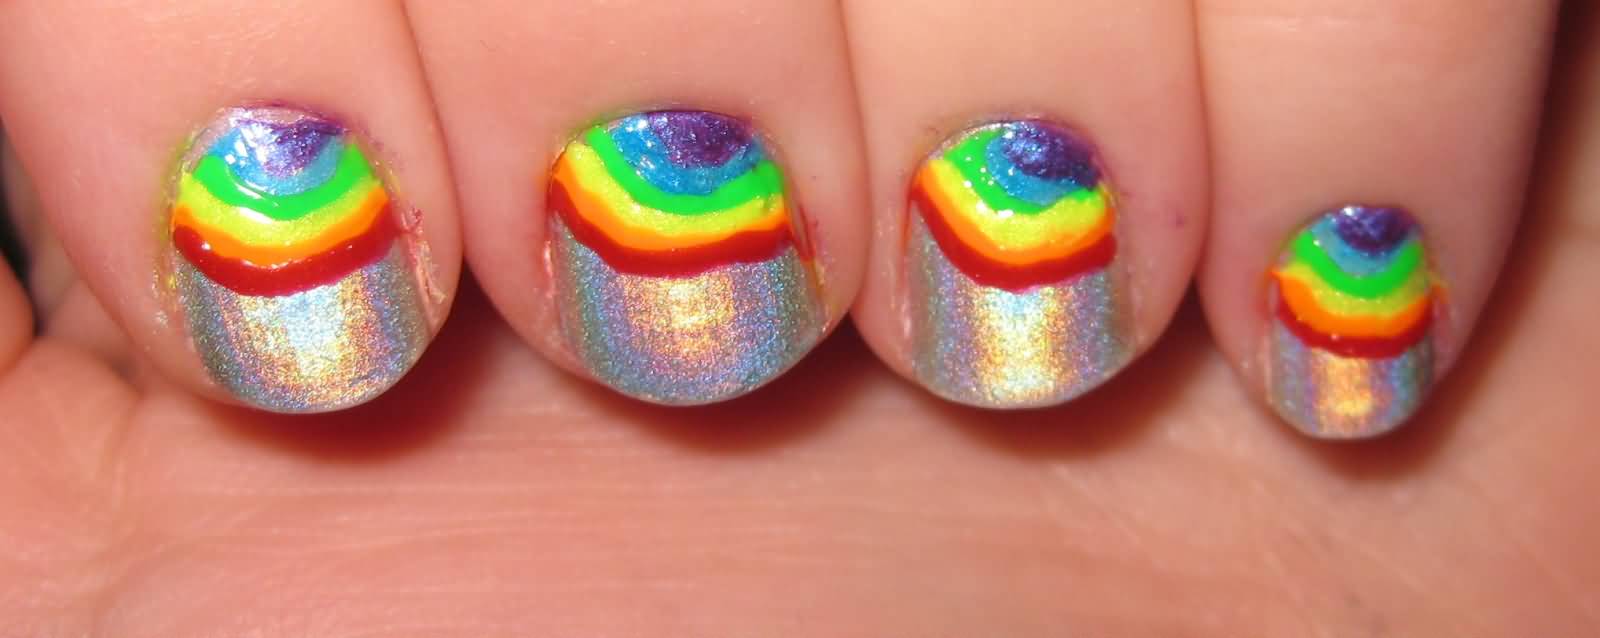 Hologram With Rainbow Design Nail Art